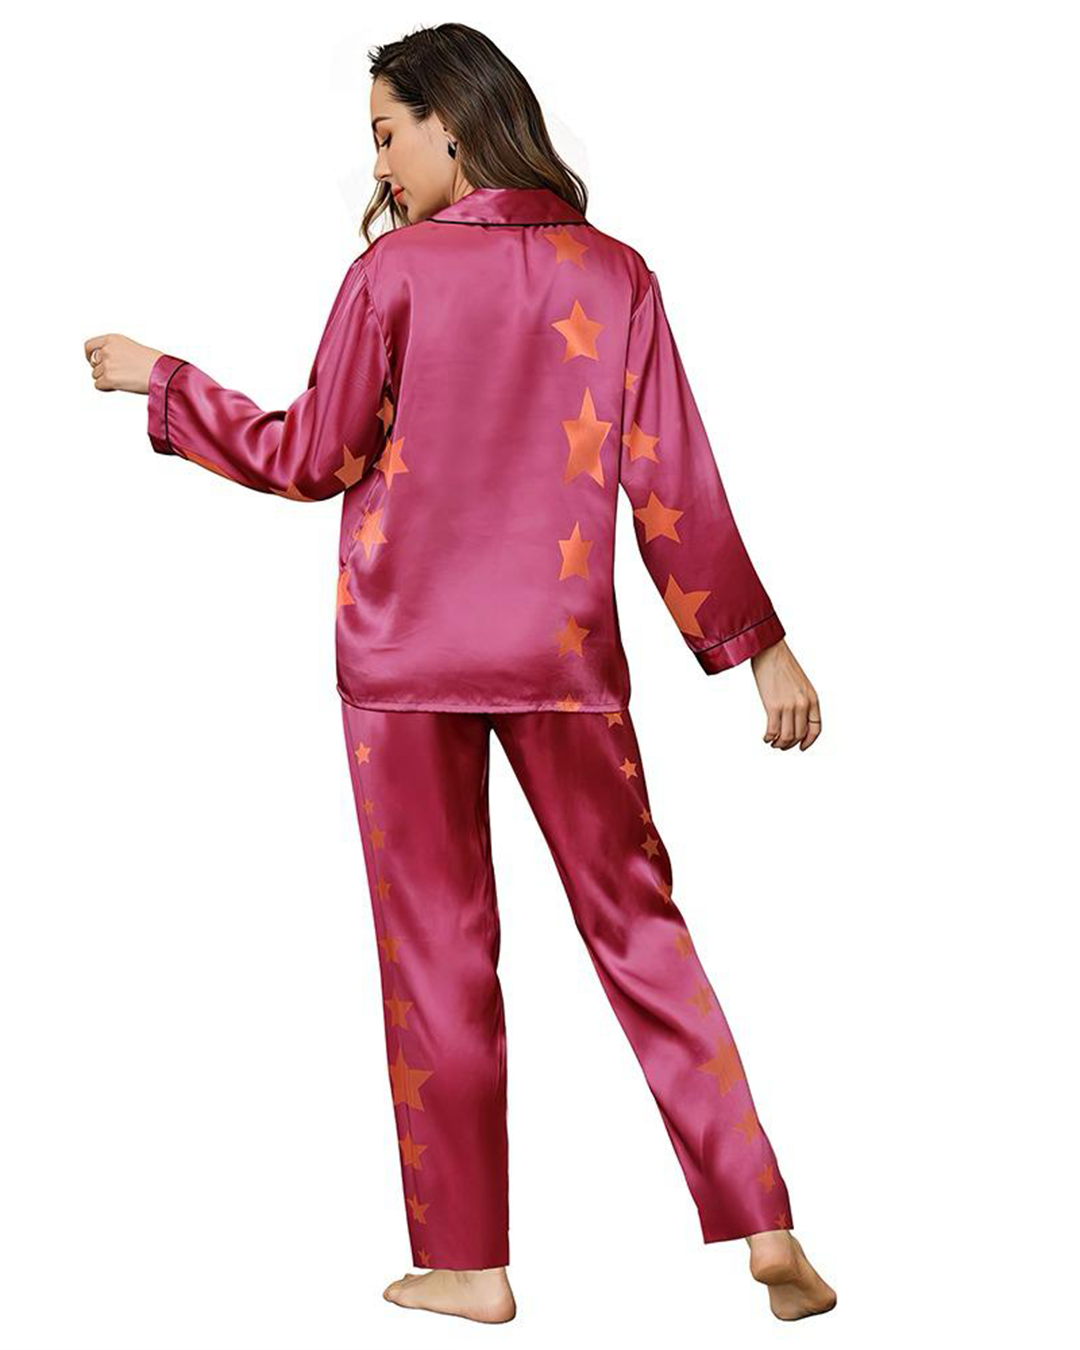 Women's pajamas with star satin buttons